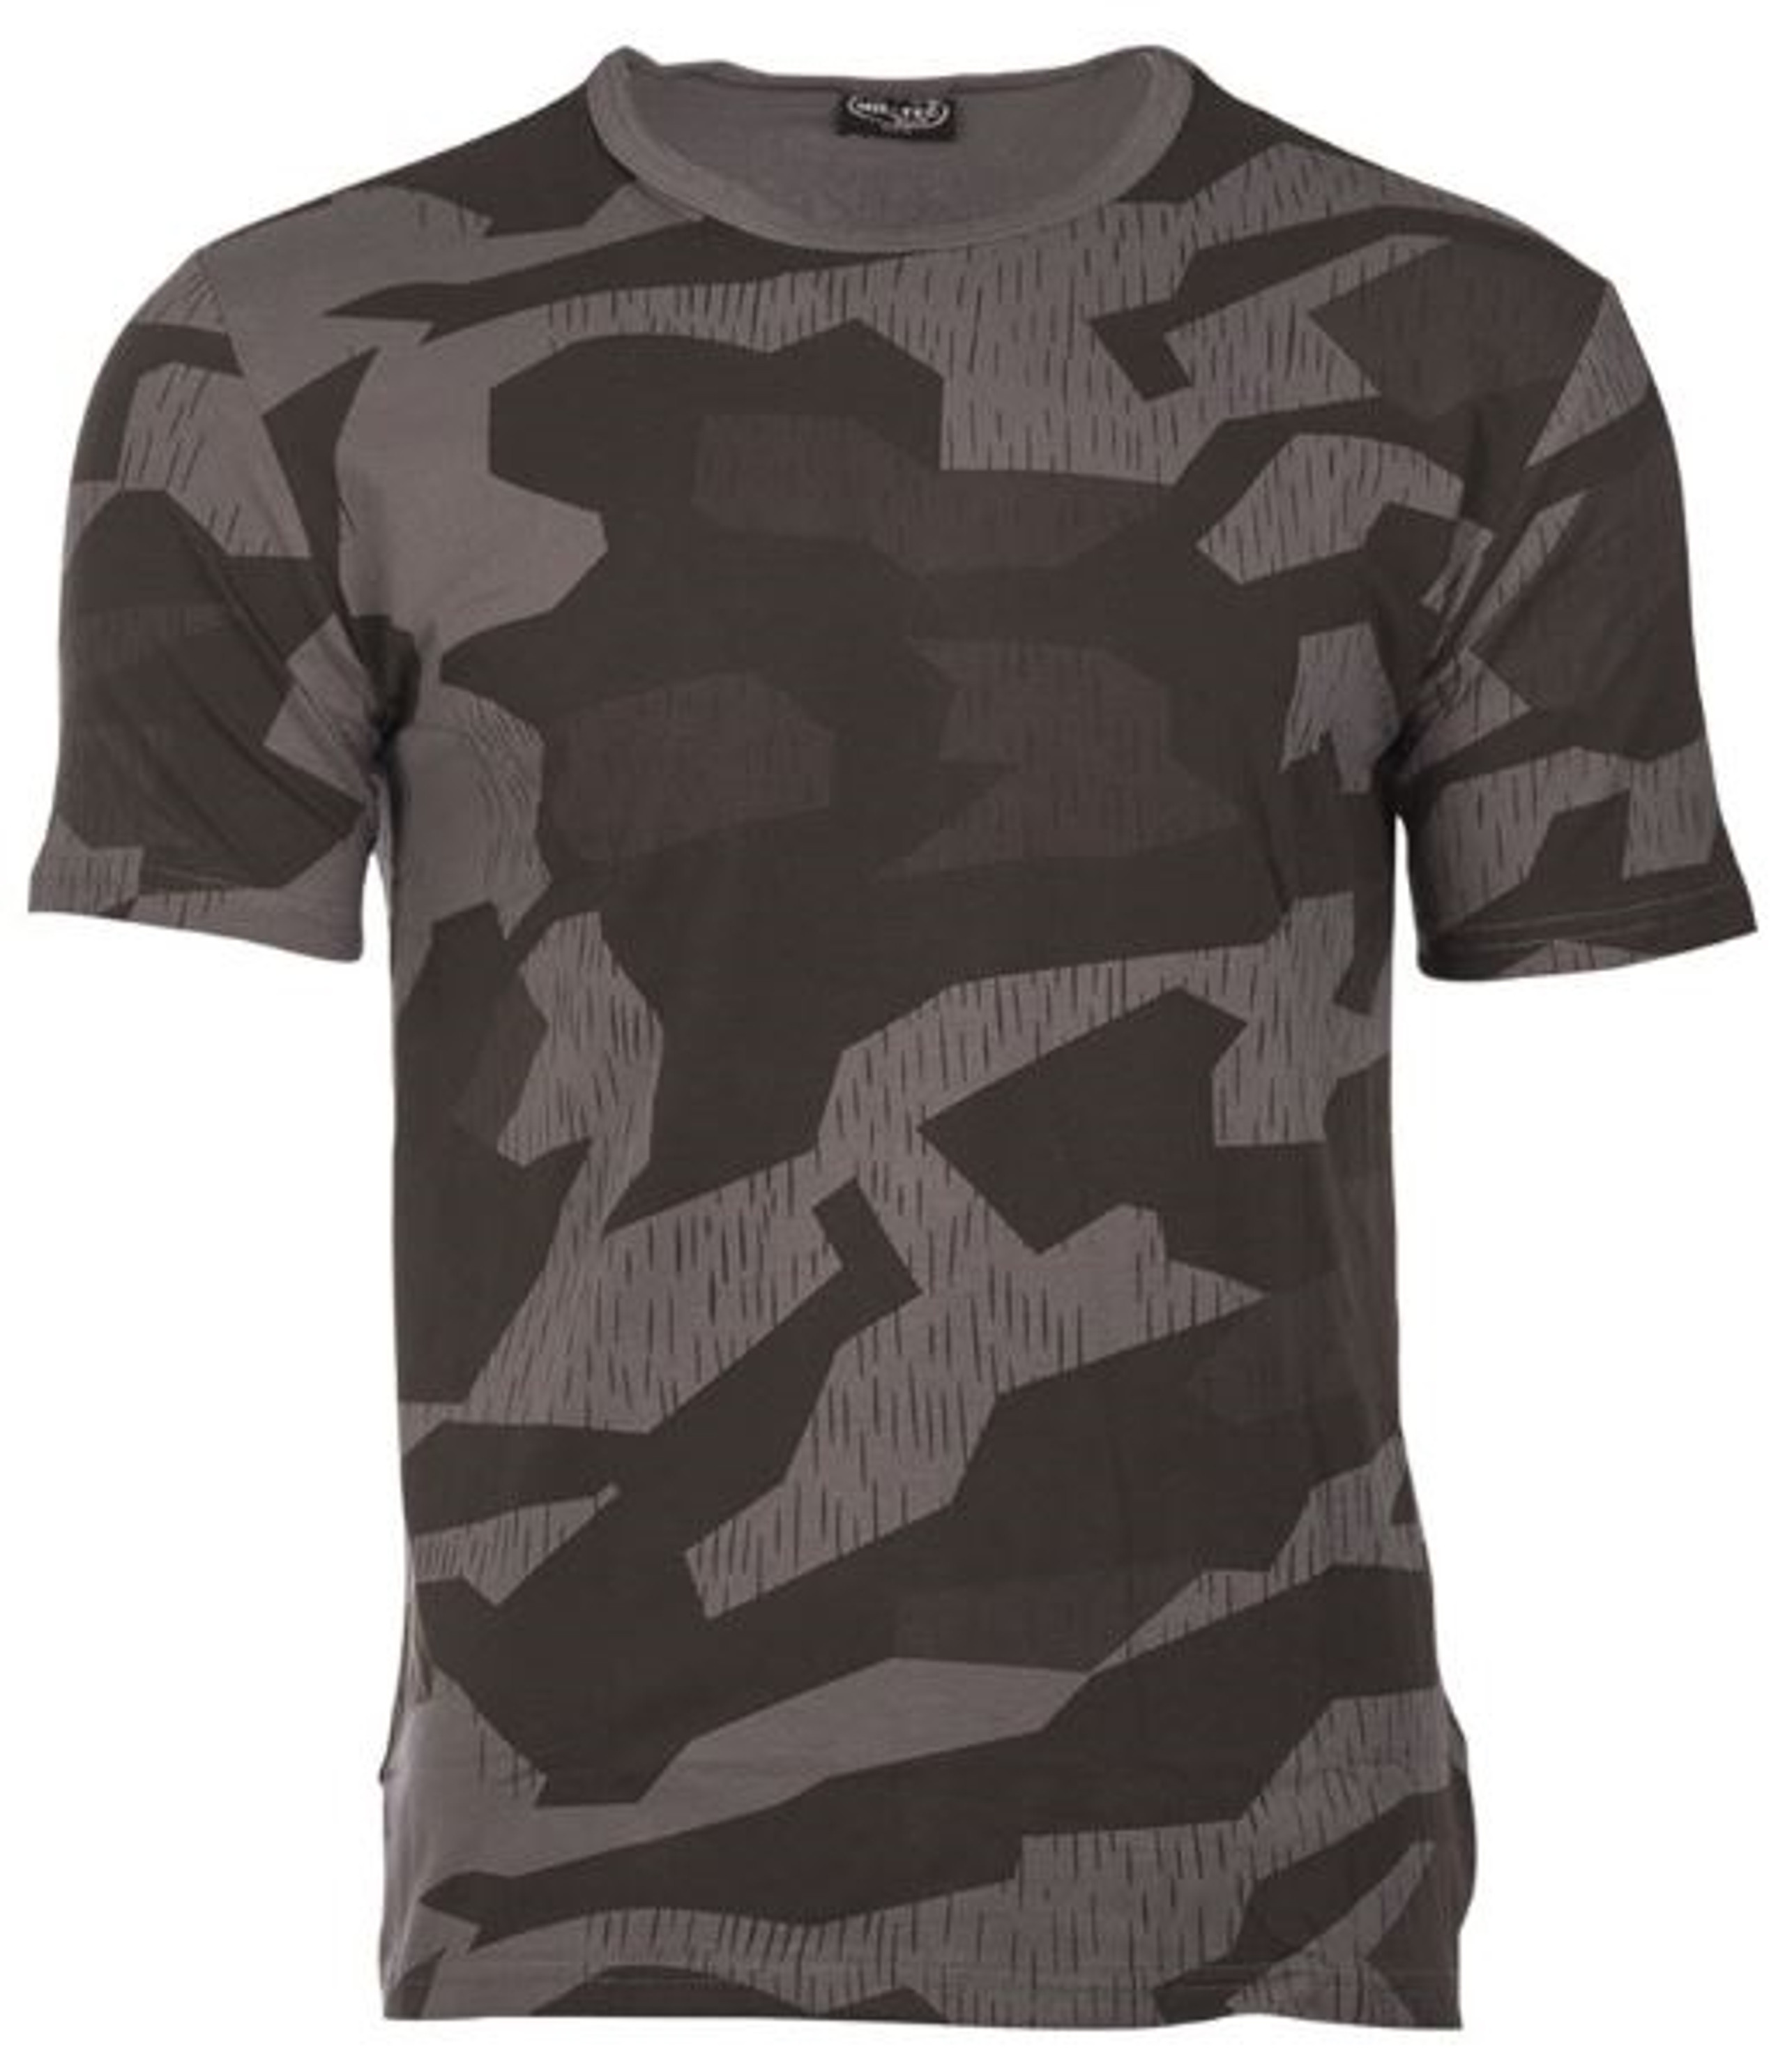 MIL-TEC 'Night' Splinter Camo T-shirt - NEW from Hessen Surplus